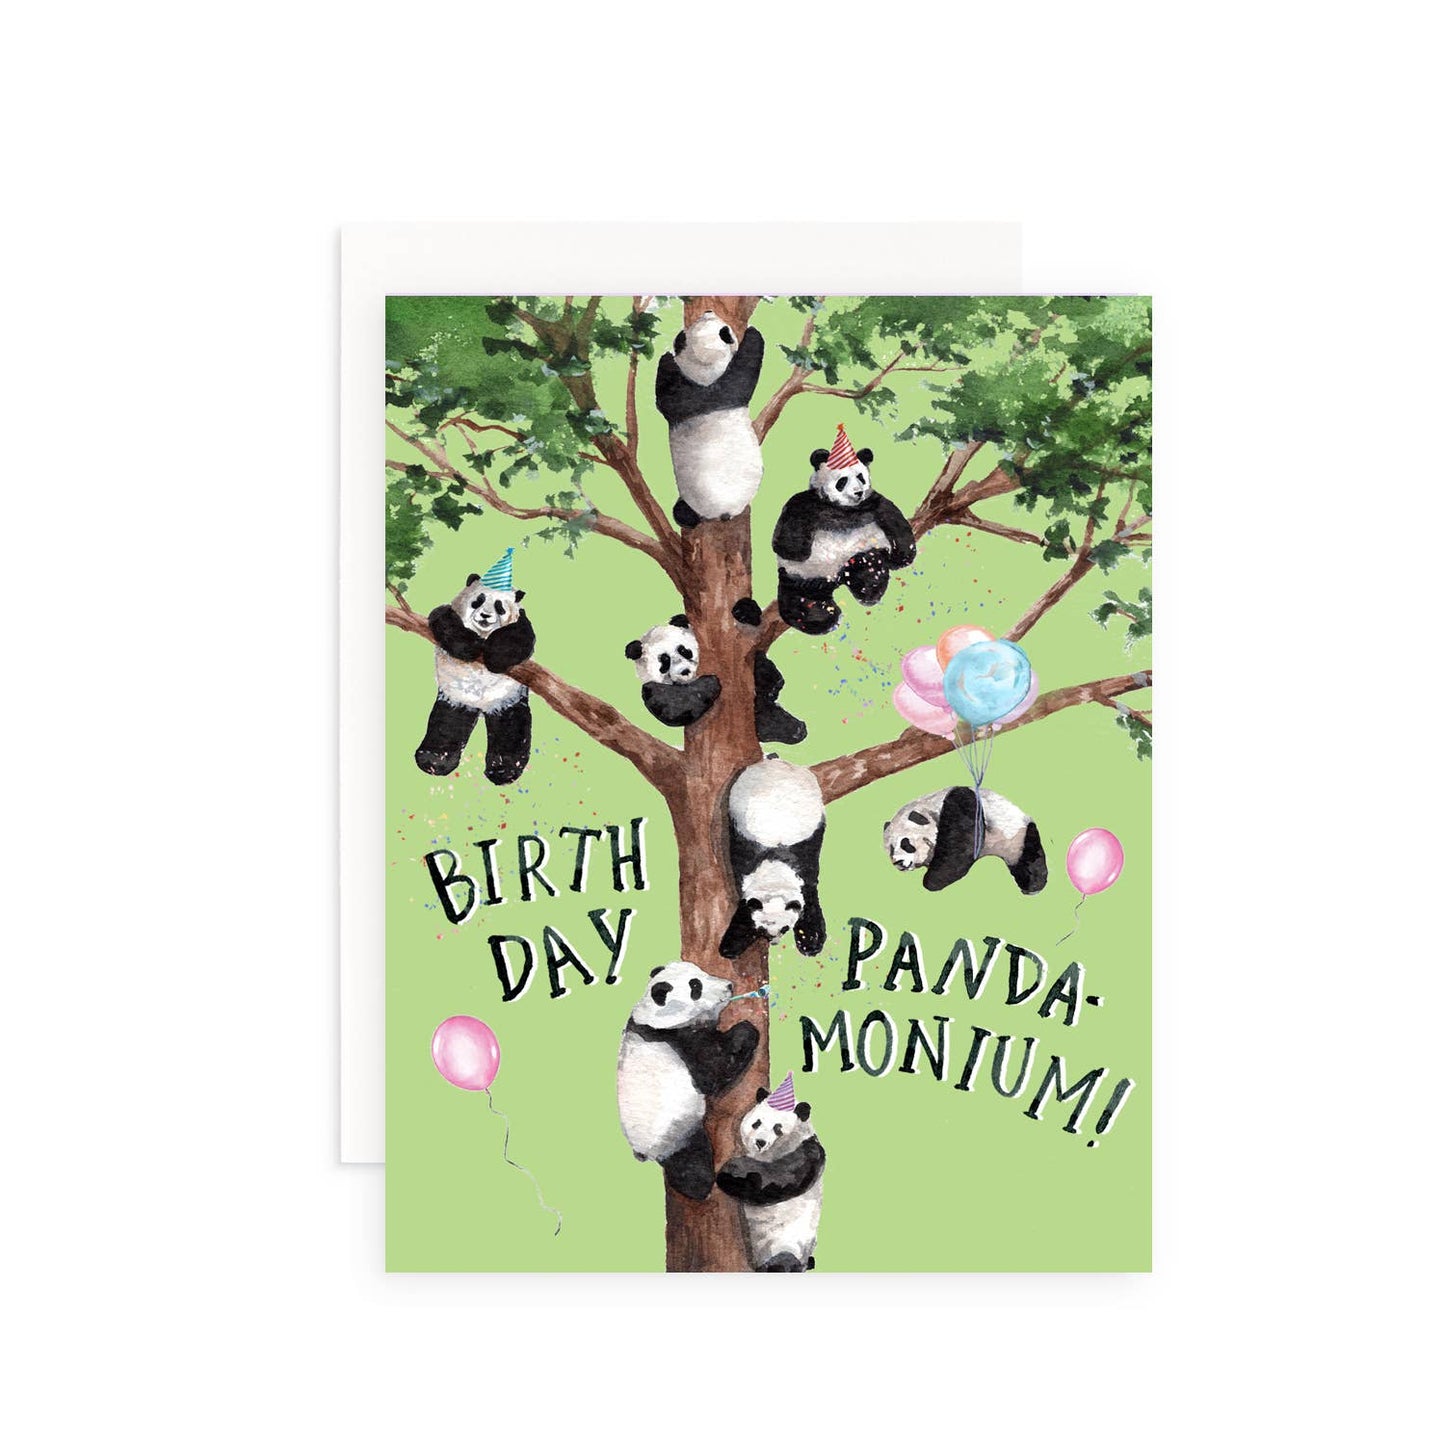 Birthday Pandamonium Greeting Card